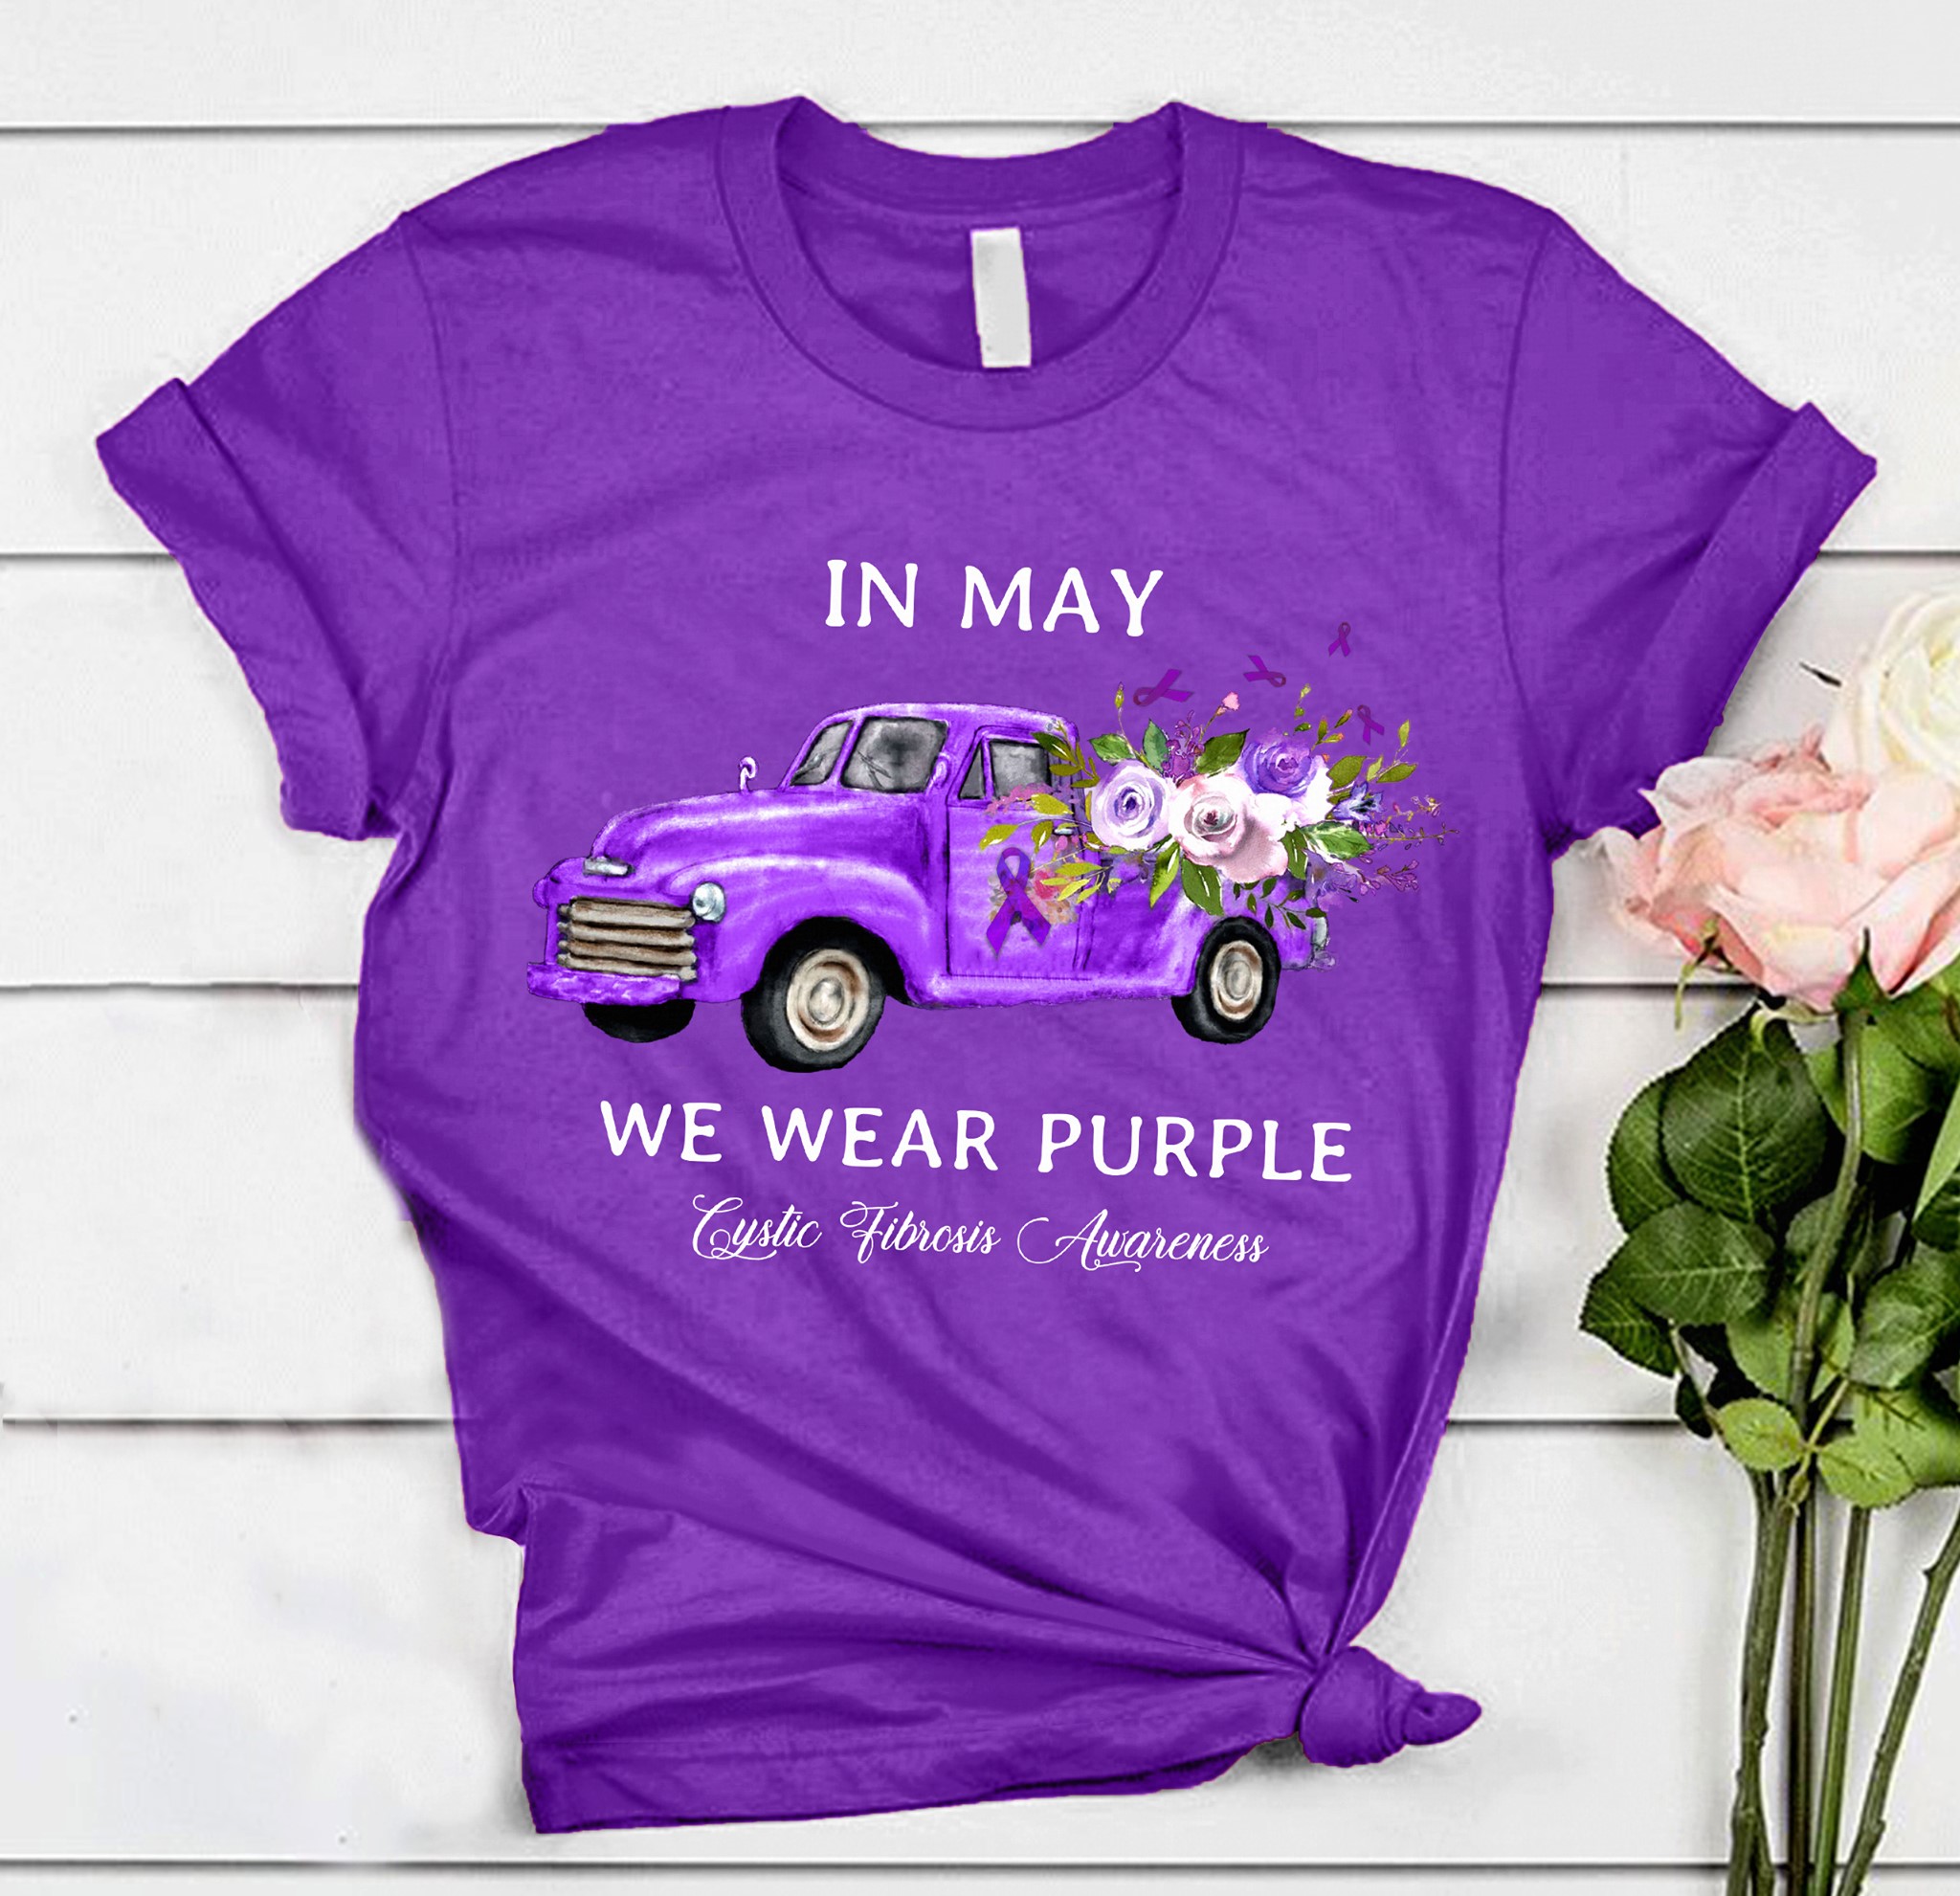 In may we wear purple – Cystic Fibrosis Awareness